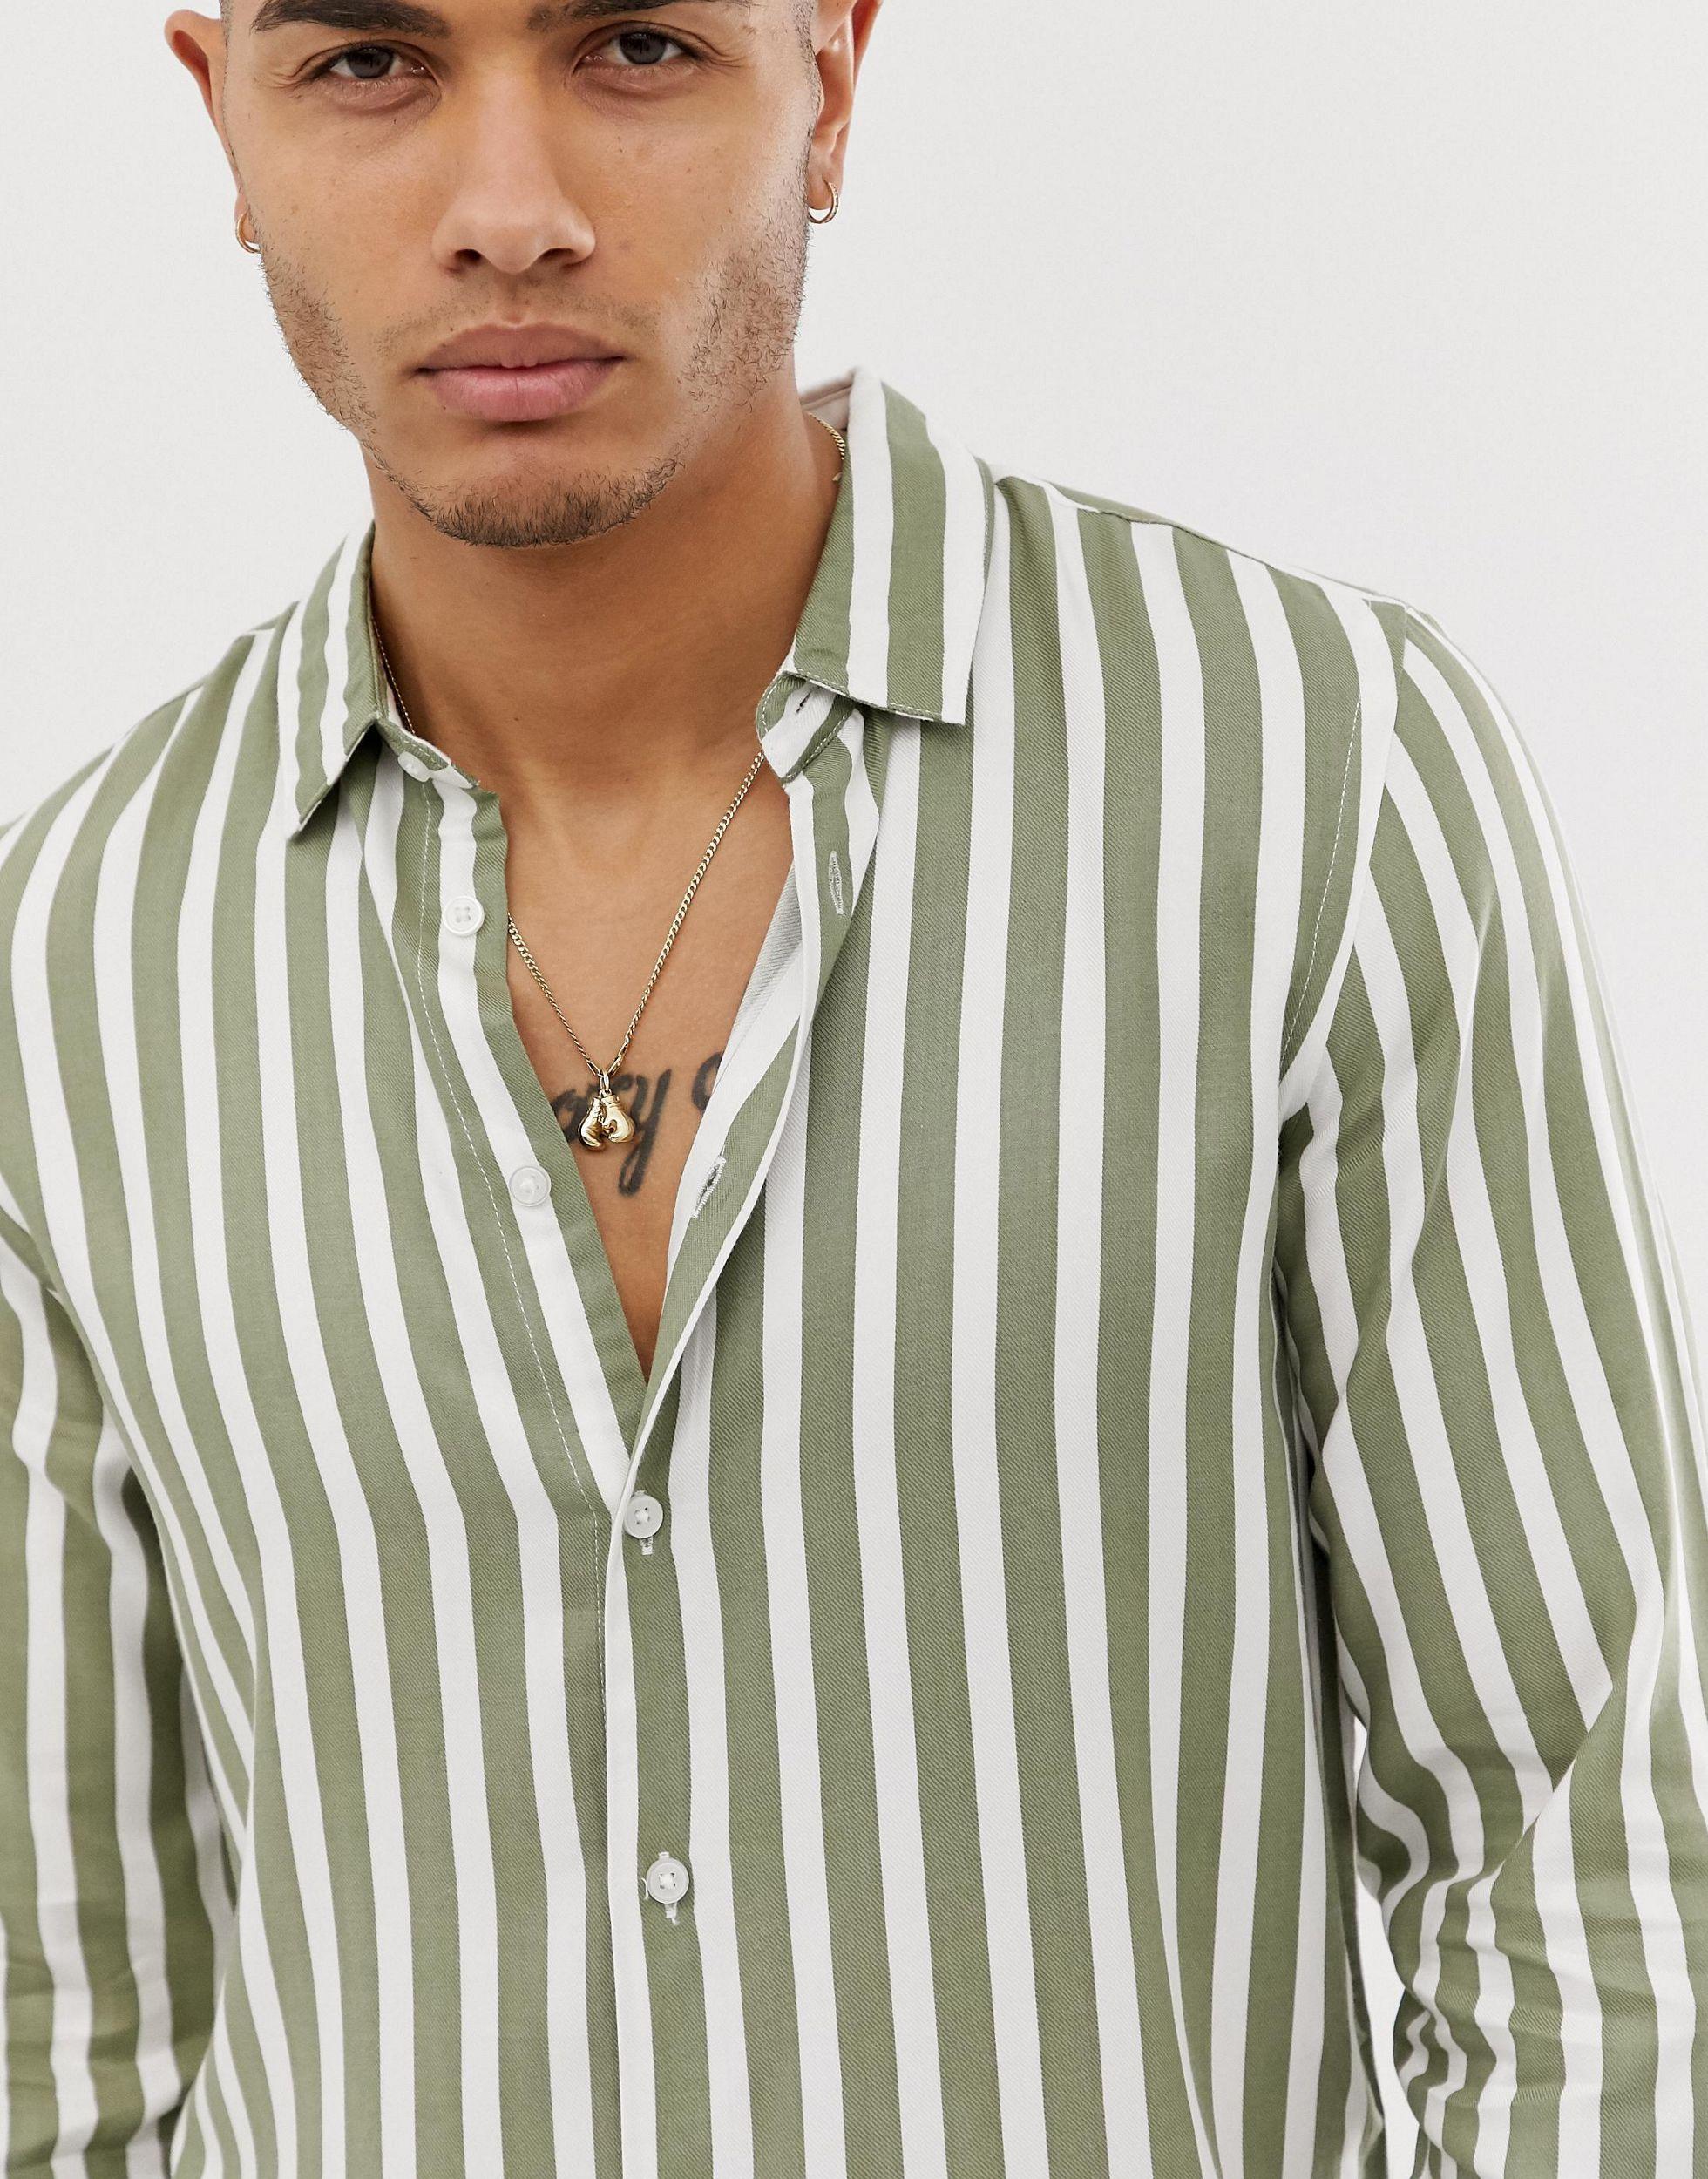 Bershka Vertical Striped Shirt in Green for Men